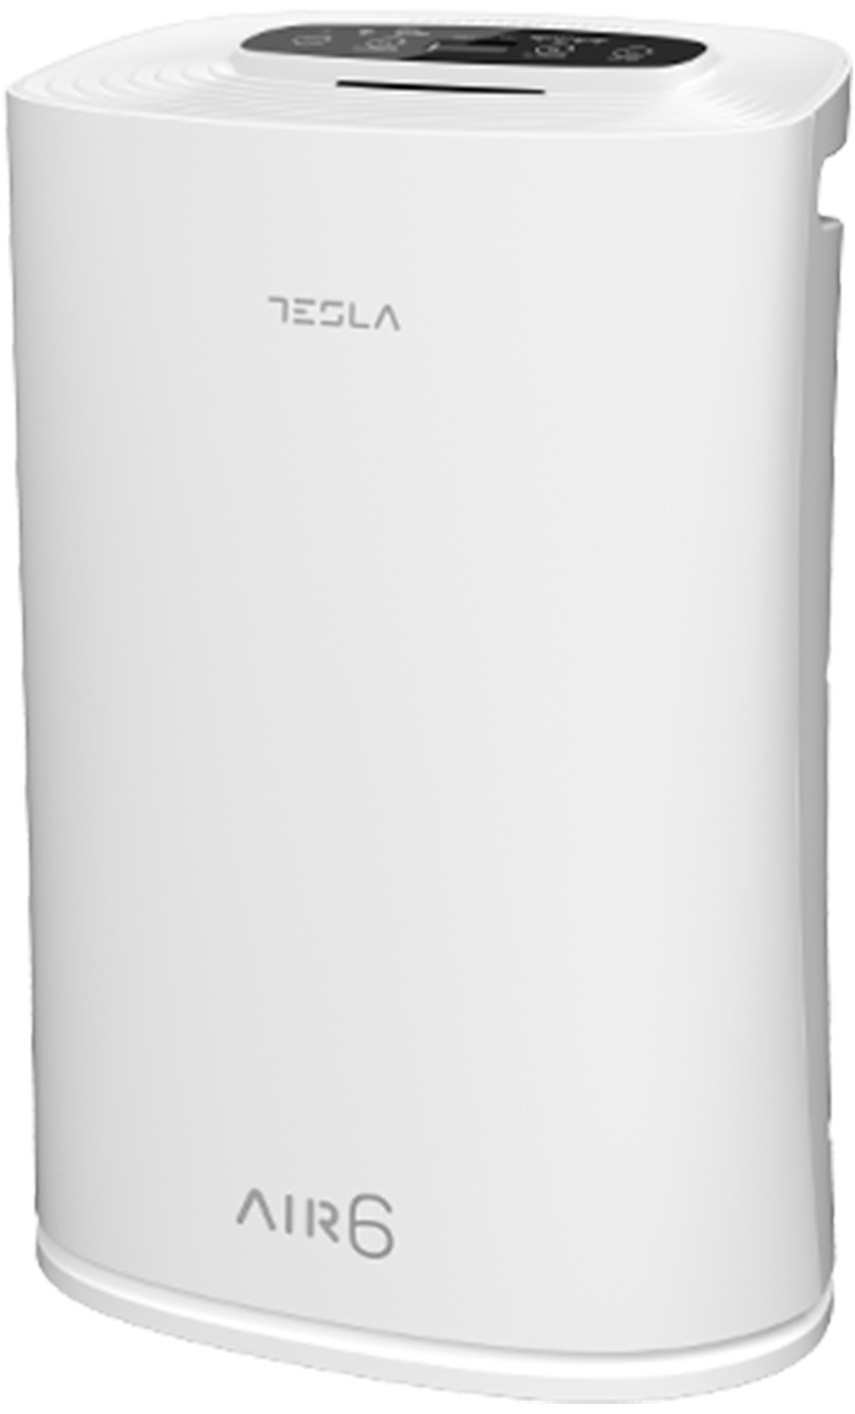 Purificator de aer Tesla Air 6Filtru HEPA + carbon activ